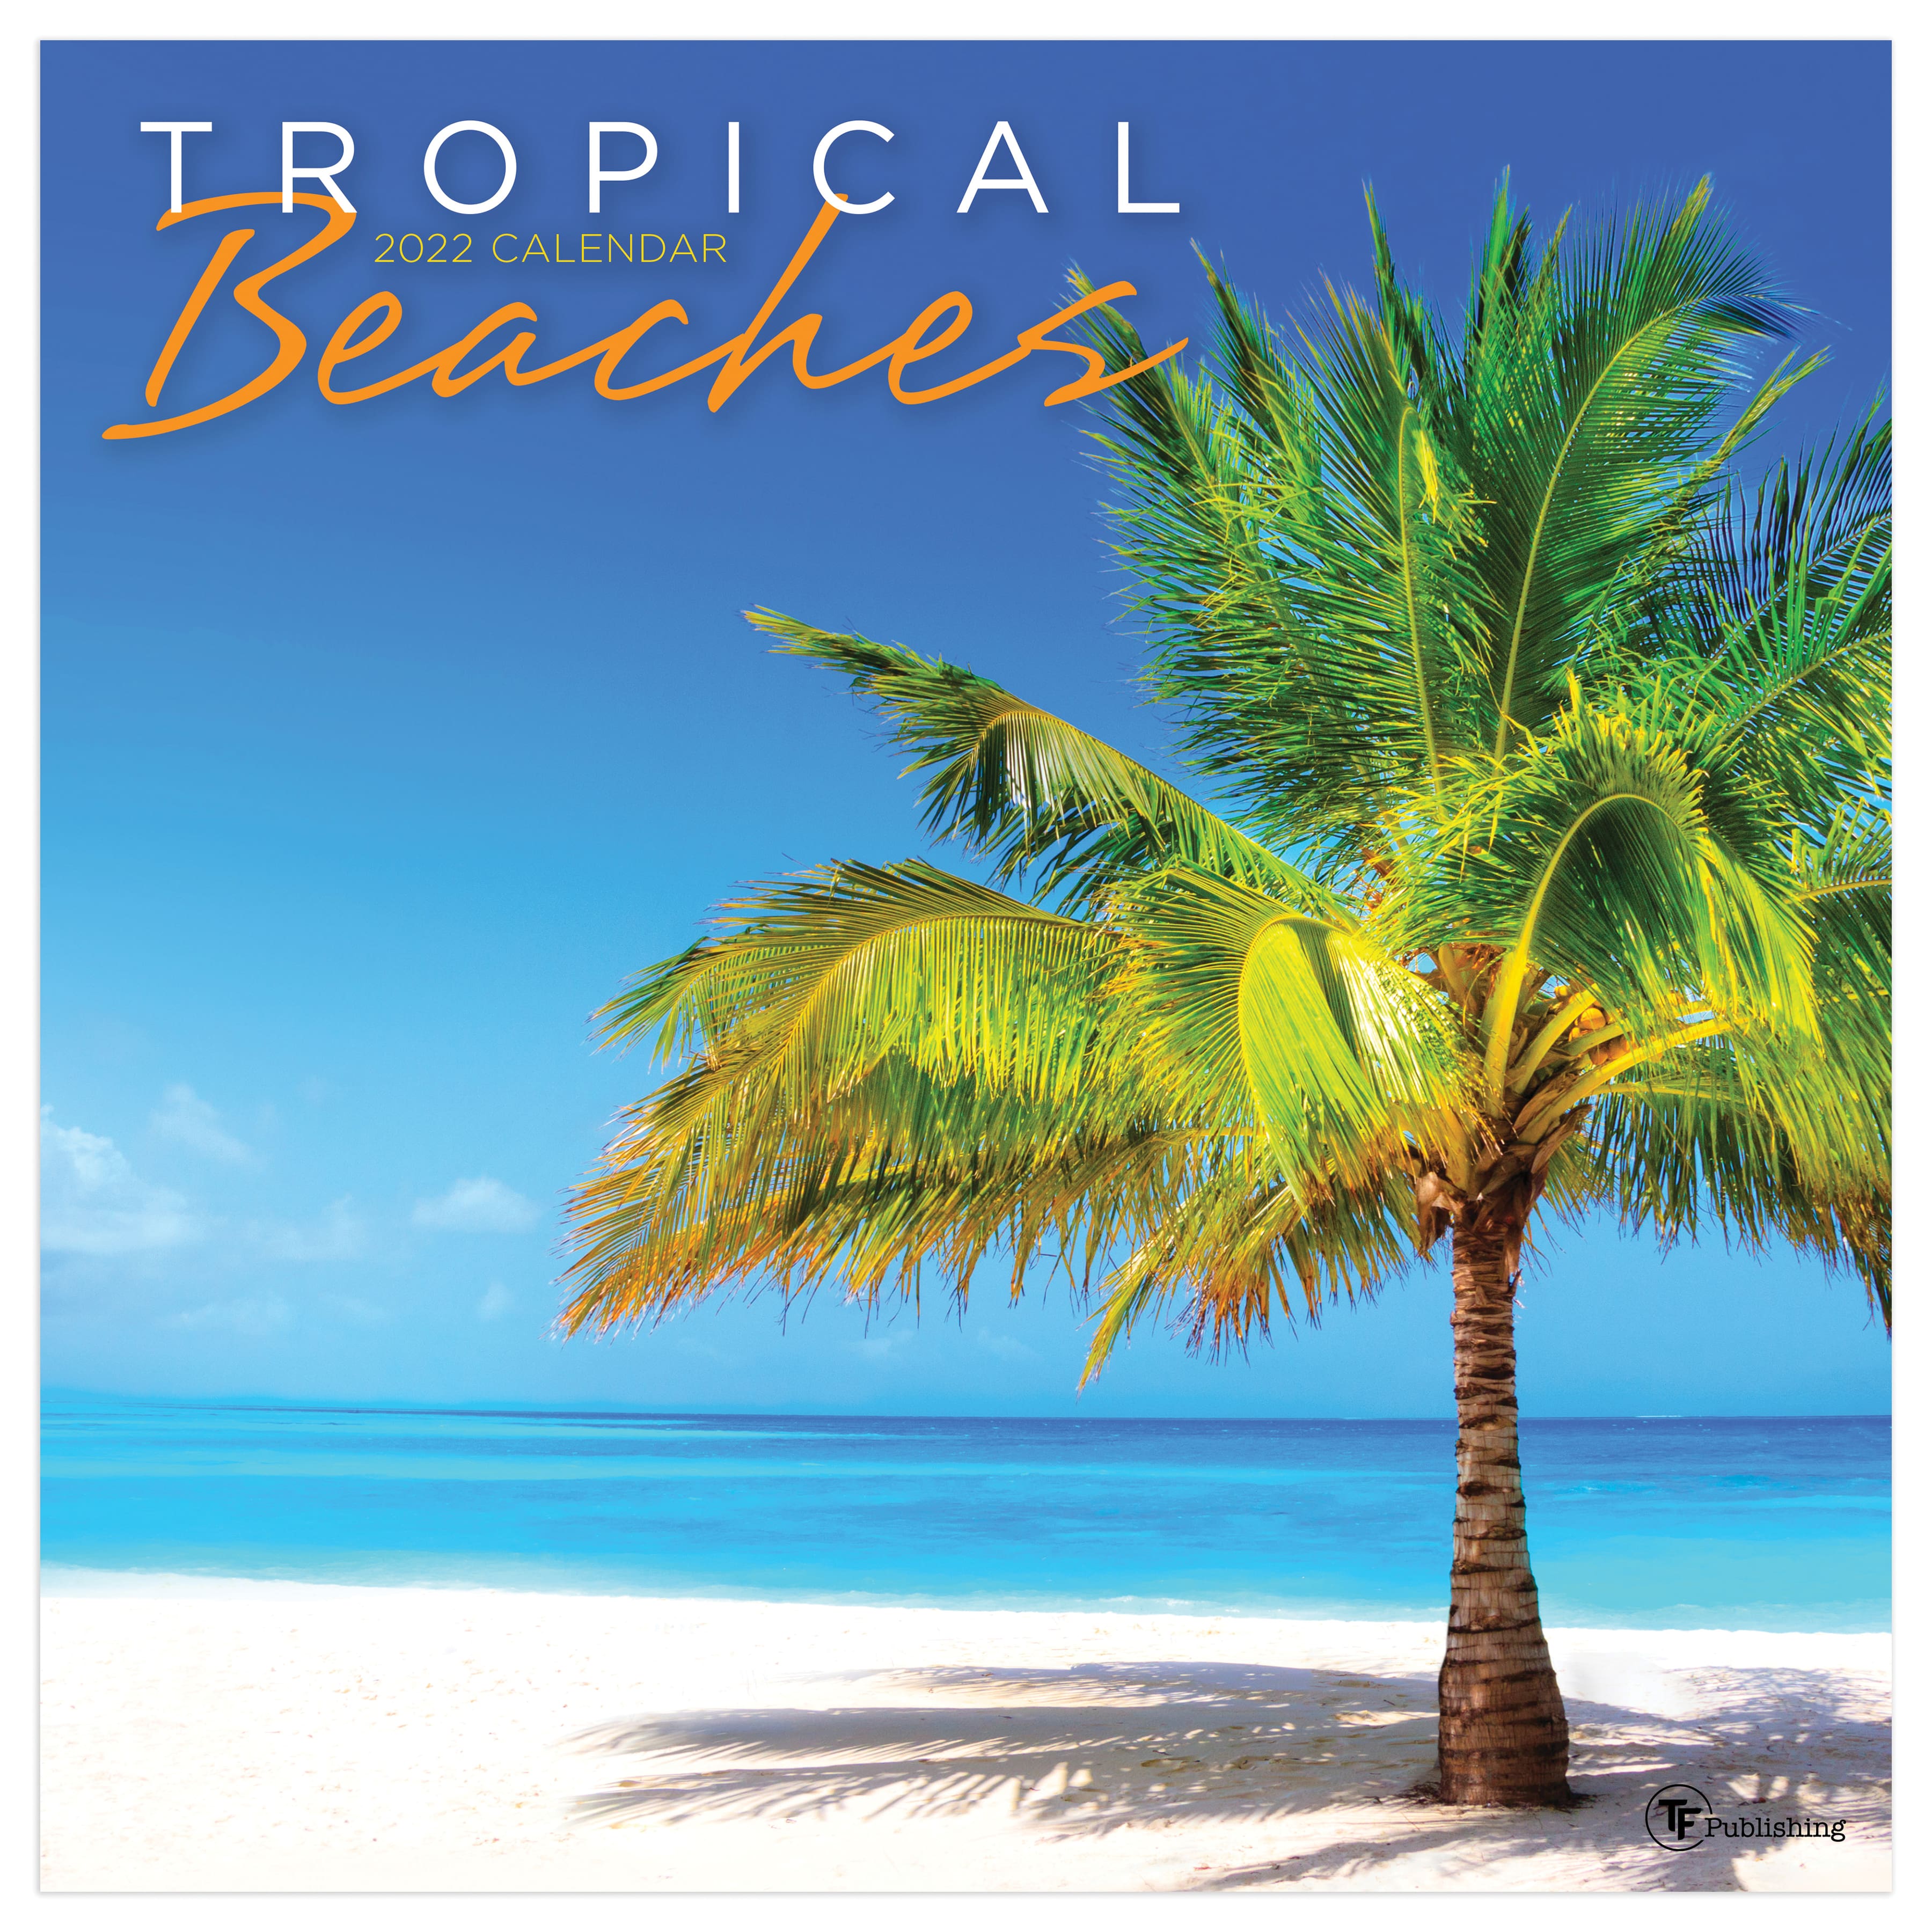 2022 Tropical Beaches Calendar How To Find Out Wher | June 2022 Calendar